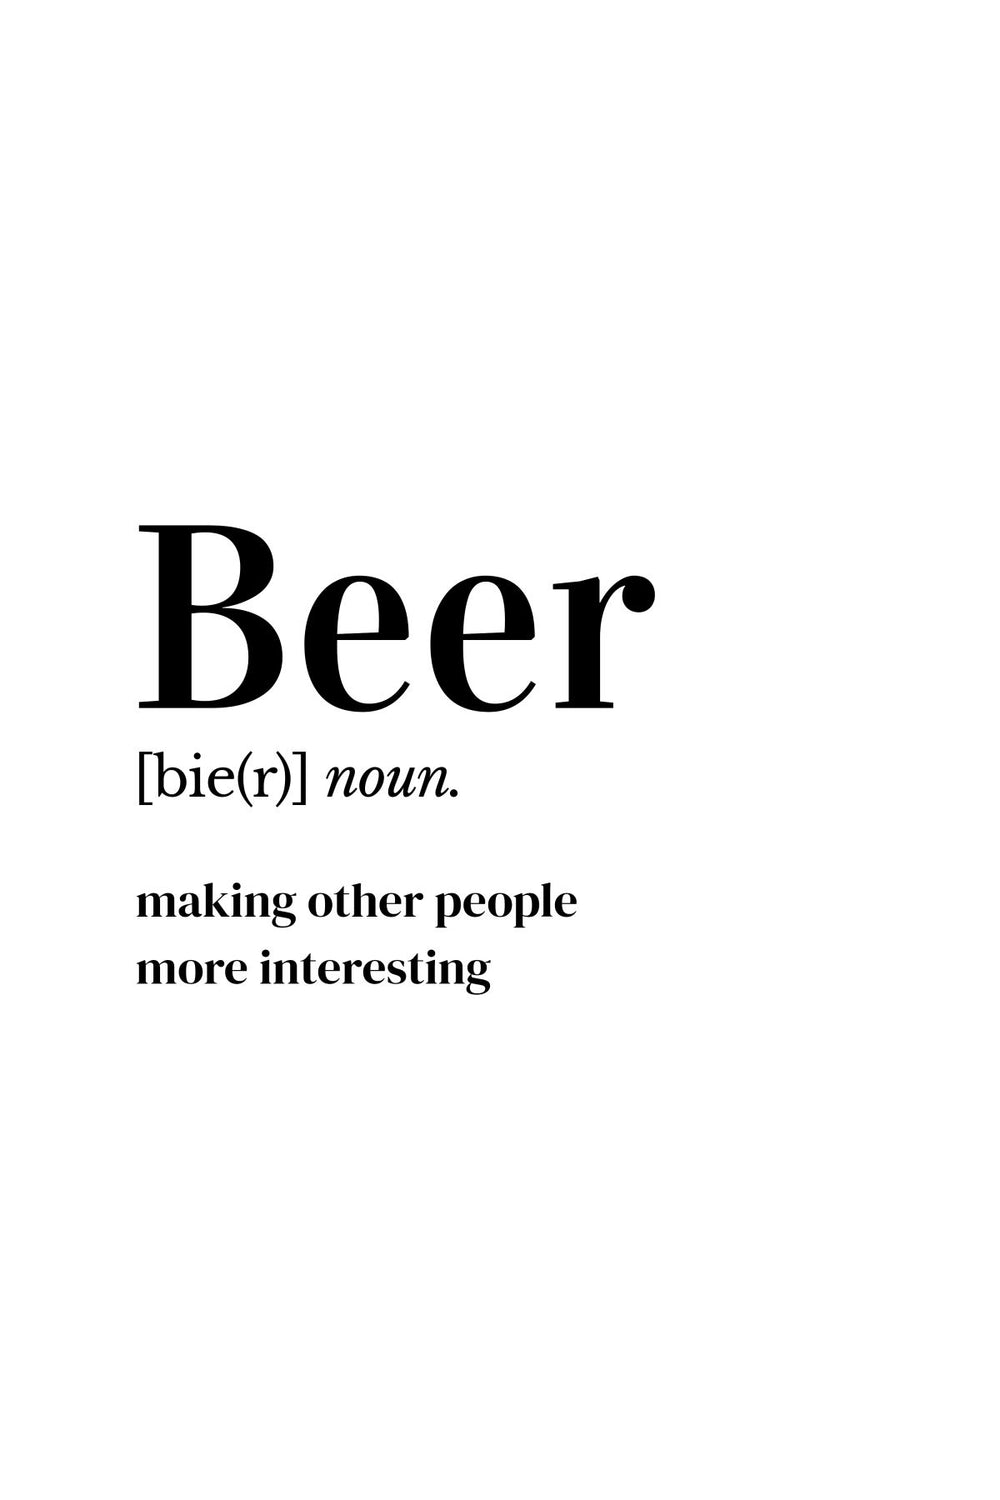 Beer The Noun